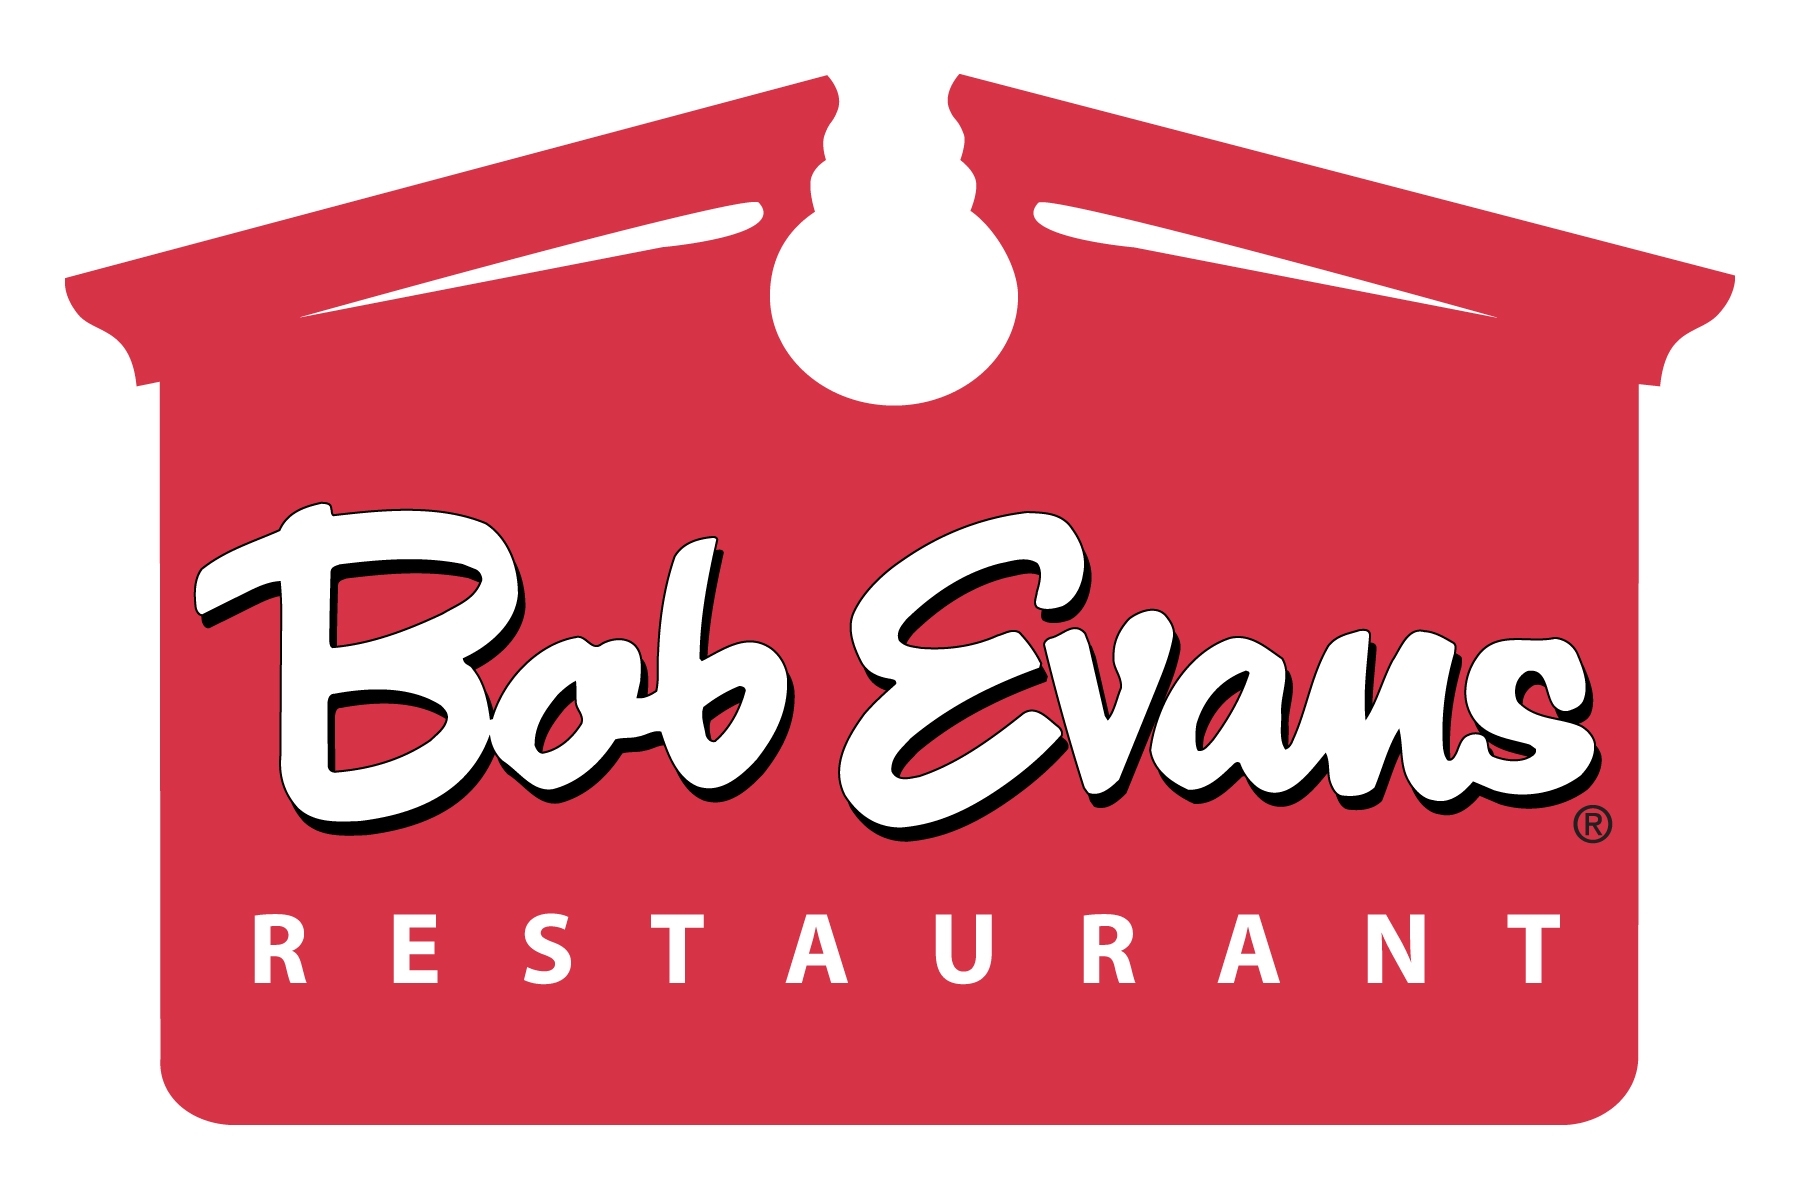 Bob Evans Restaurant To Close 27 Locations